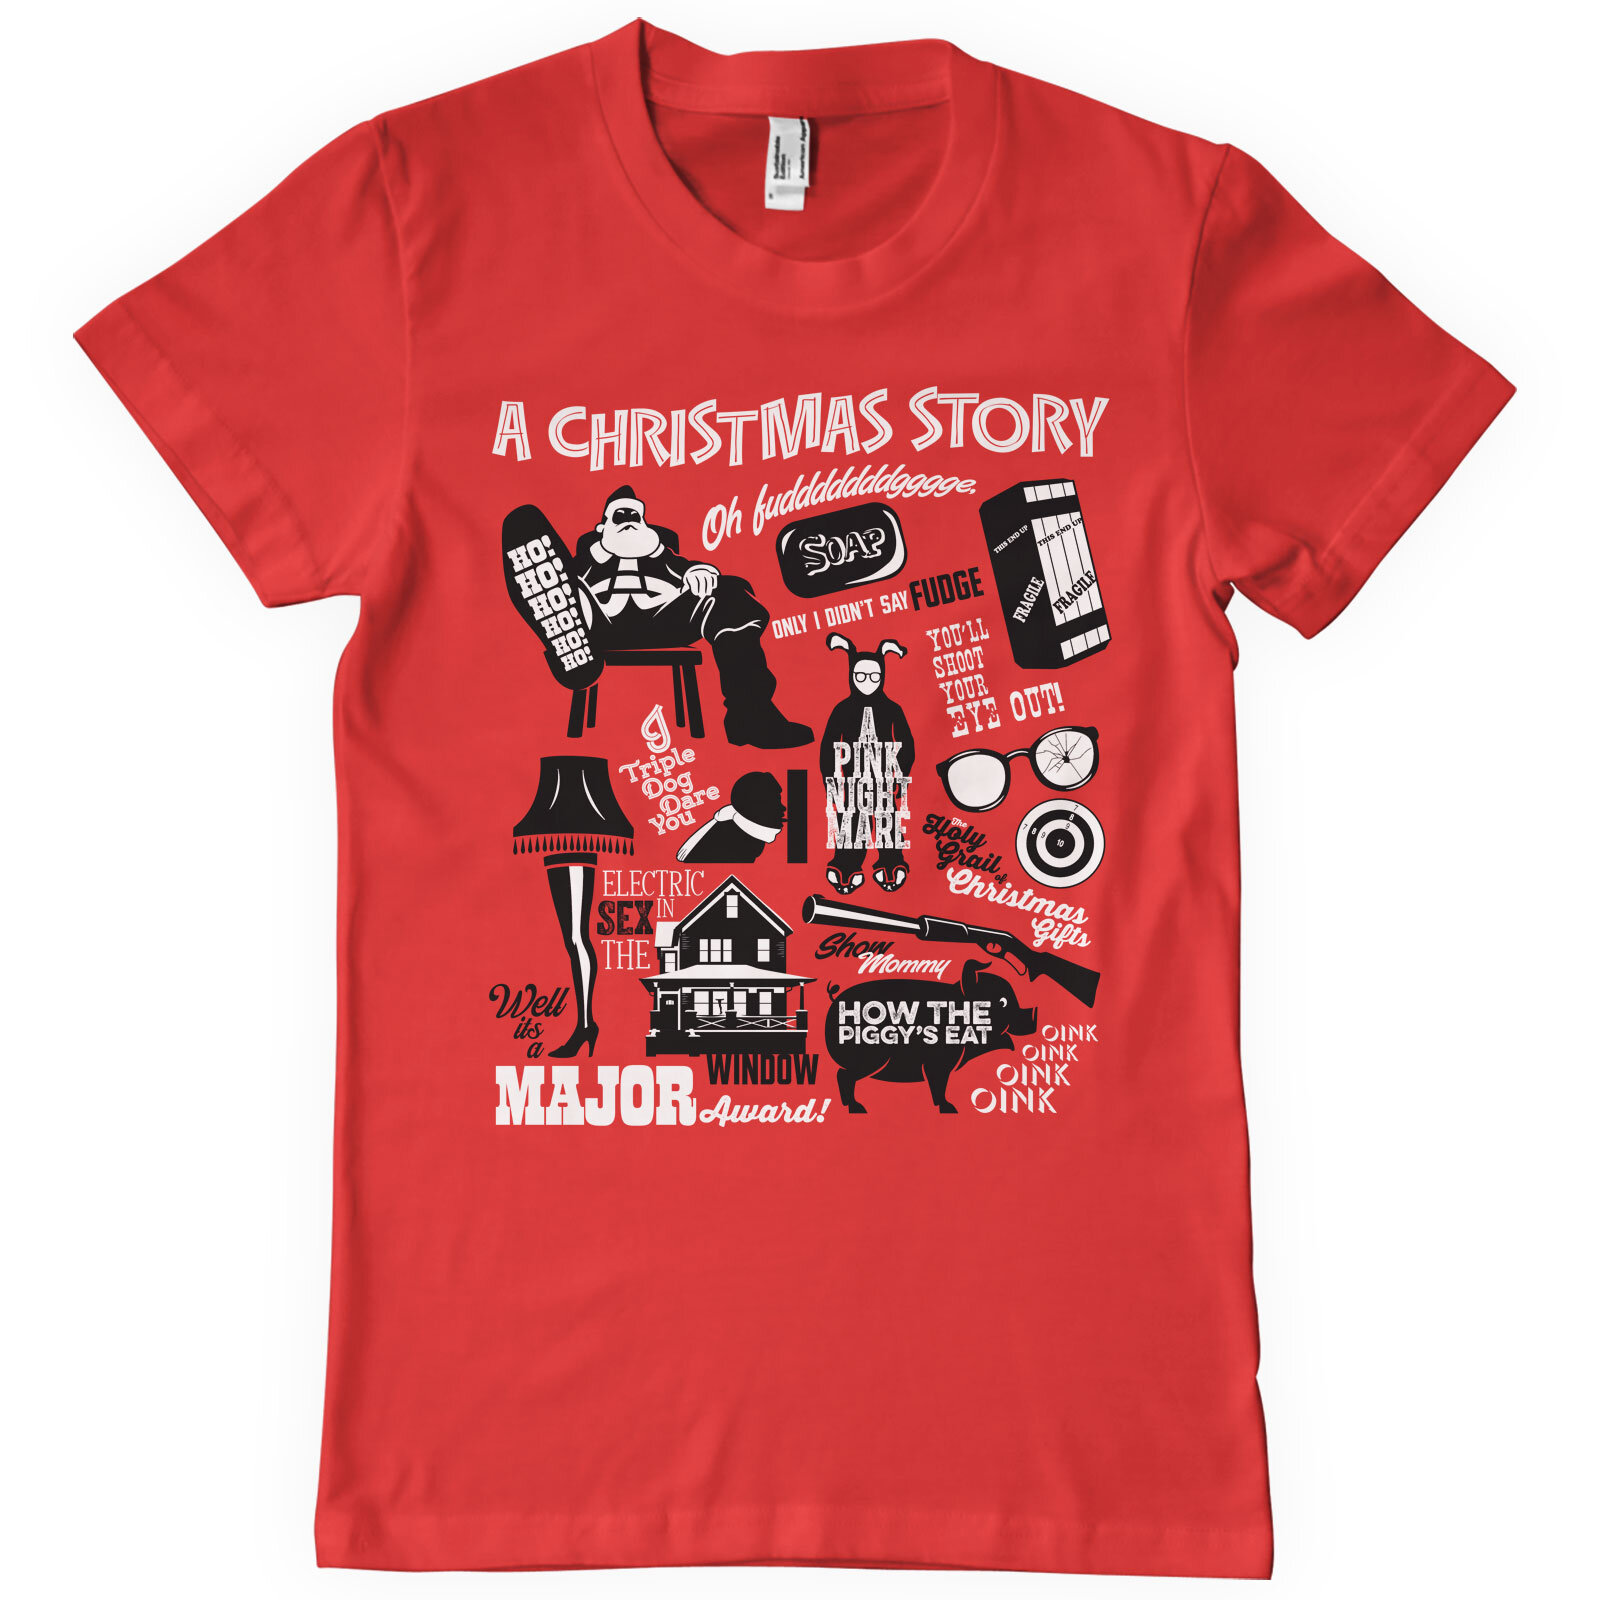 A Christmas Story icons T-Shirt